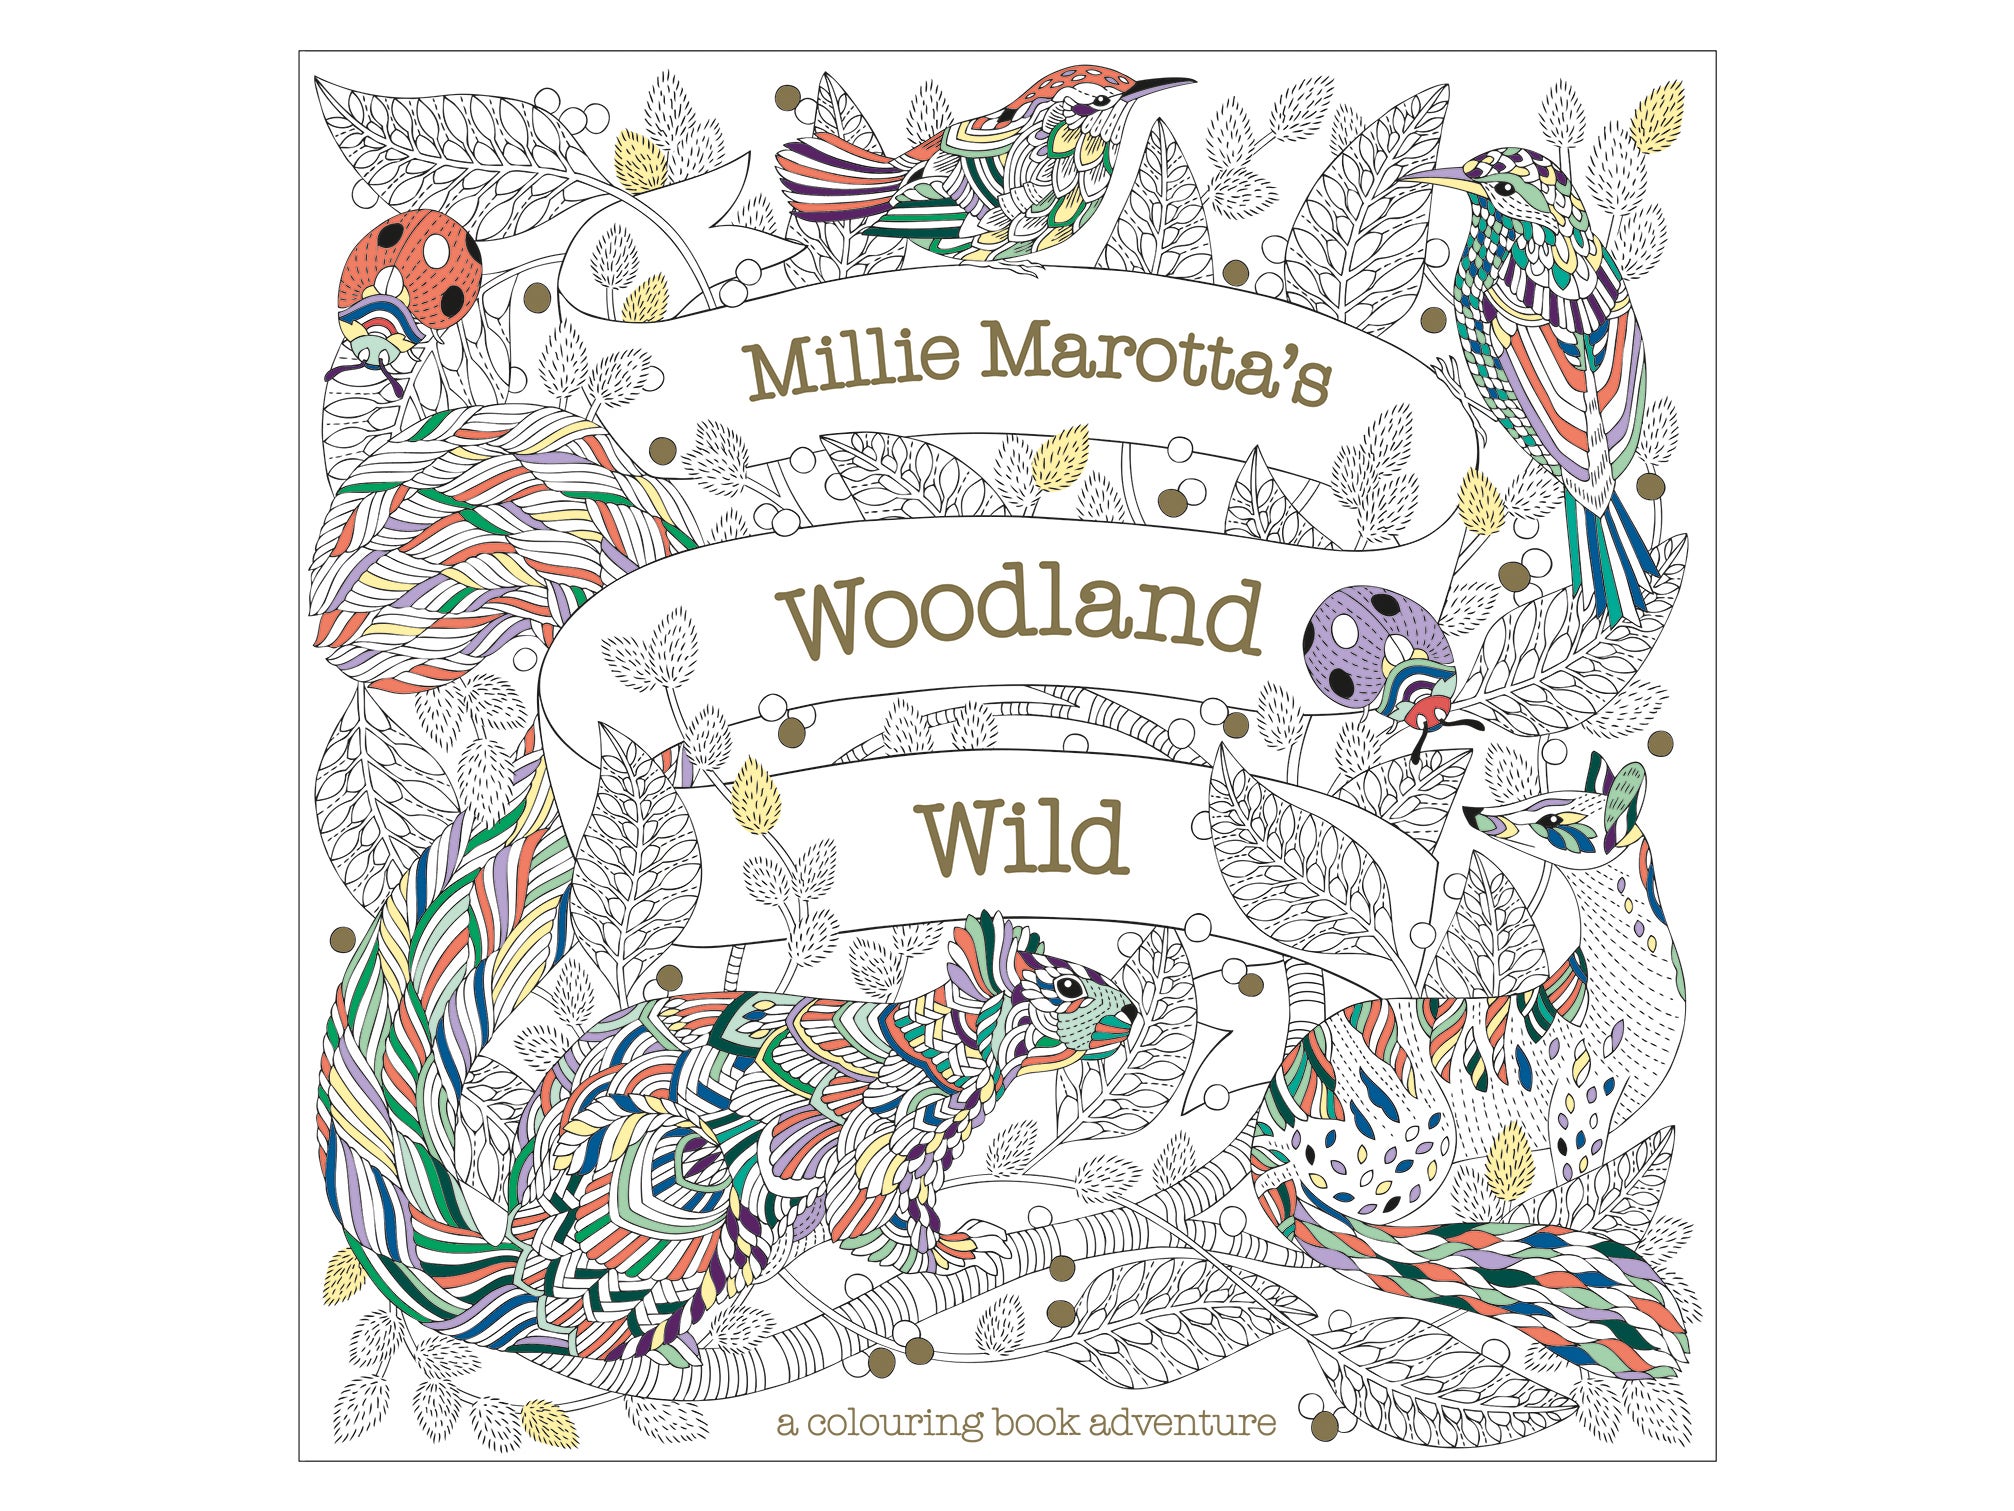 Millie Marotta’s Woodland Wild .jpg